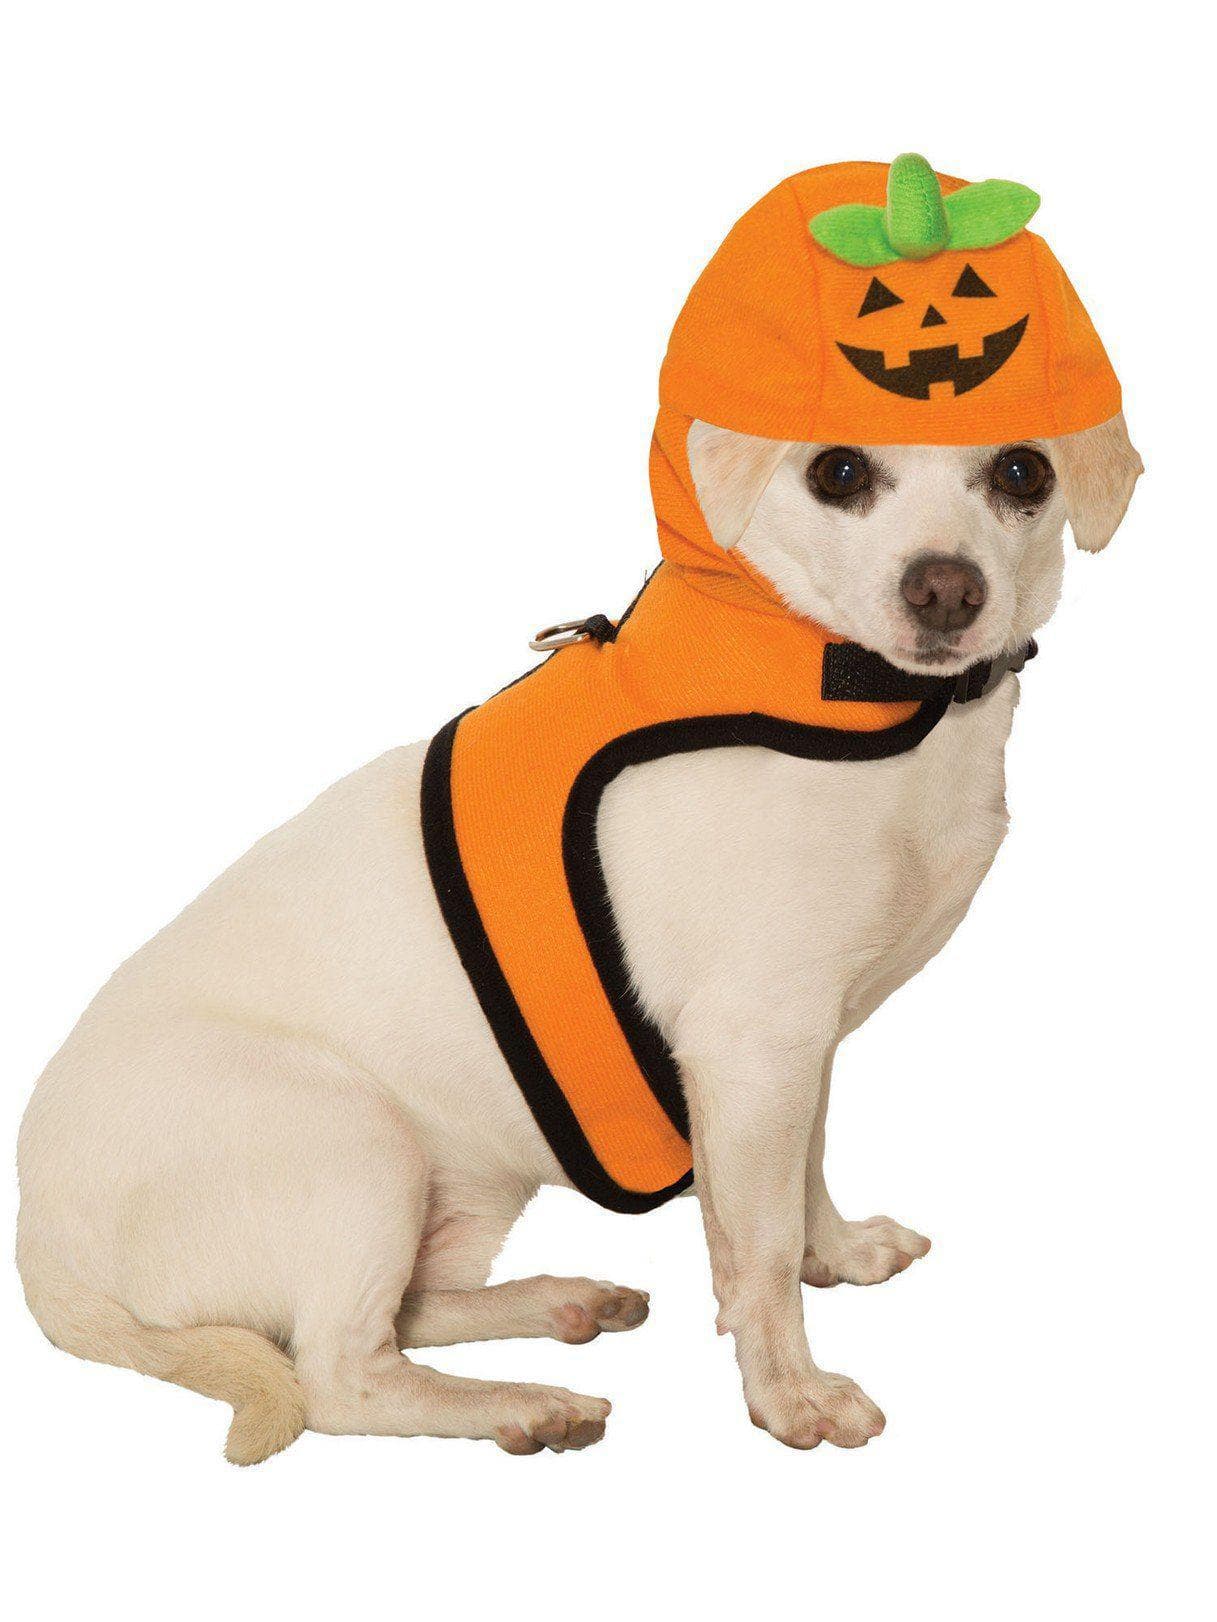 Pet Jack-o-Lantern Costume - costumes.com